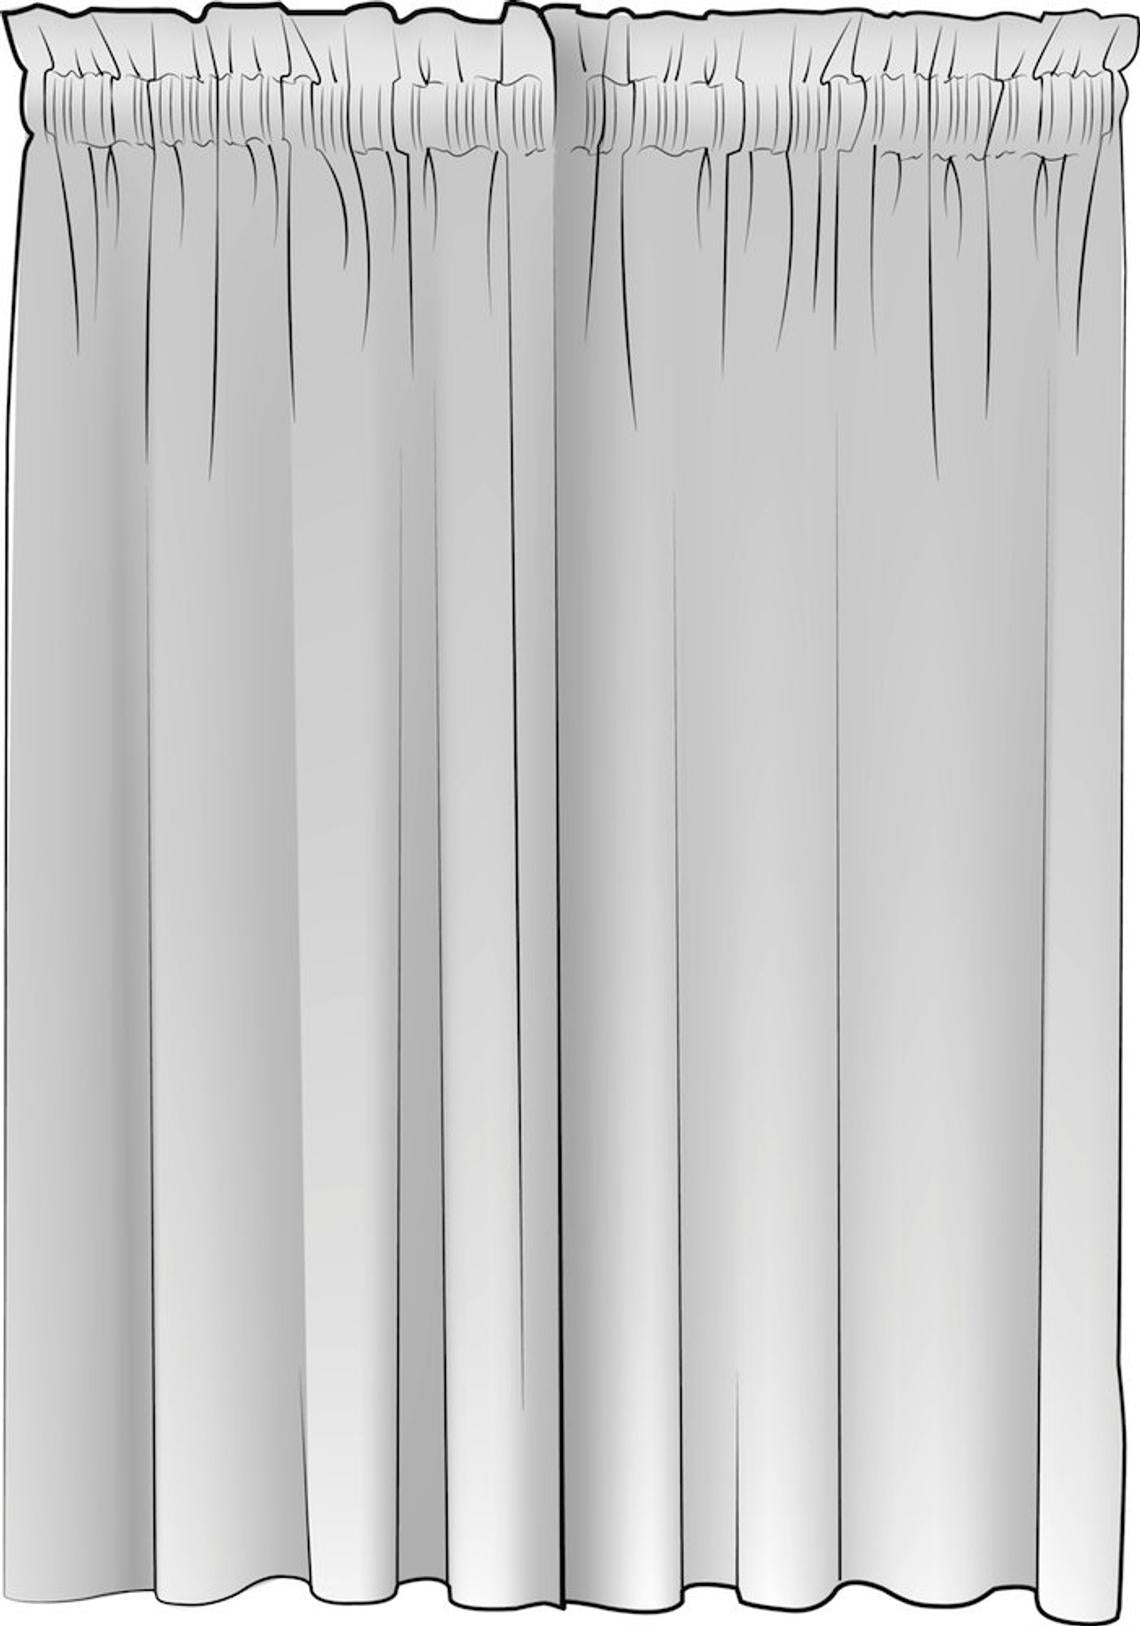 rod pocket curtain panels pair in modern farmhouse abbot italian denim blue windowpane plaid